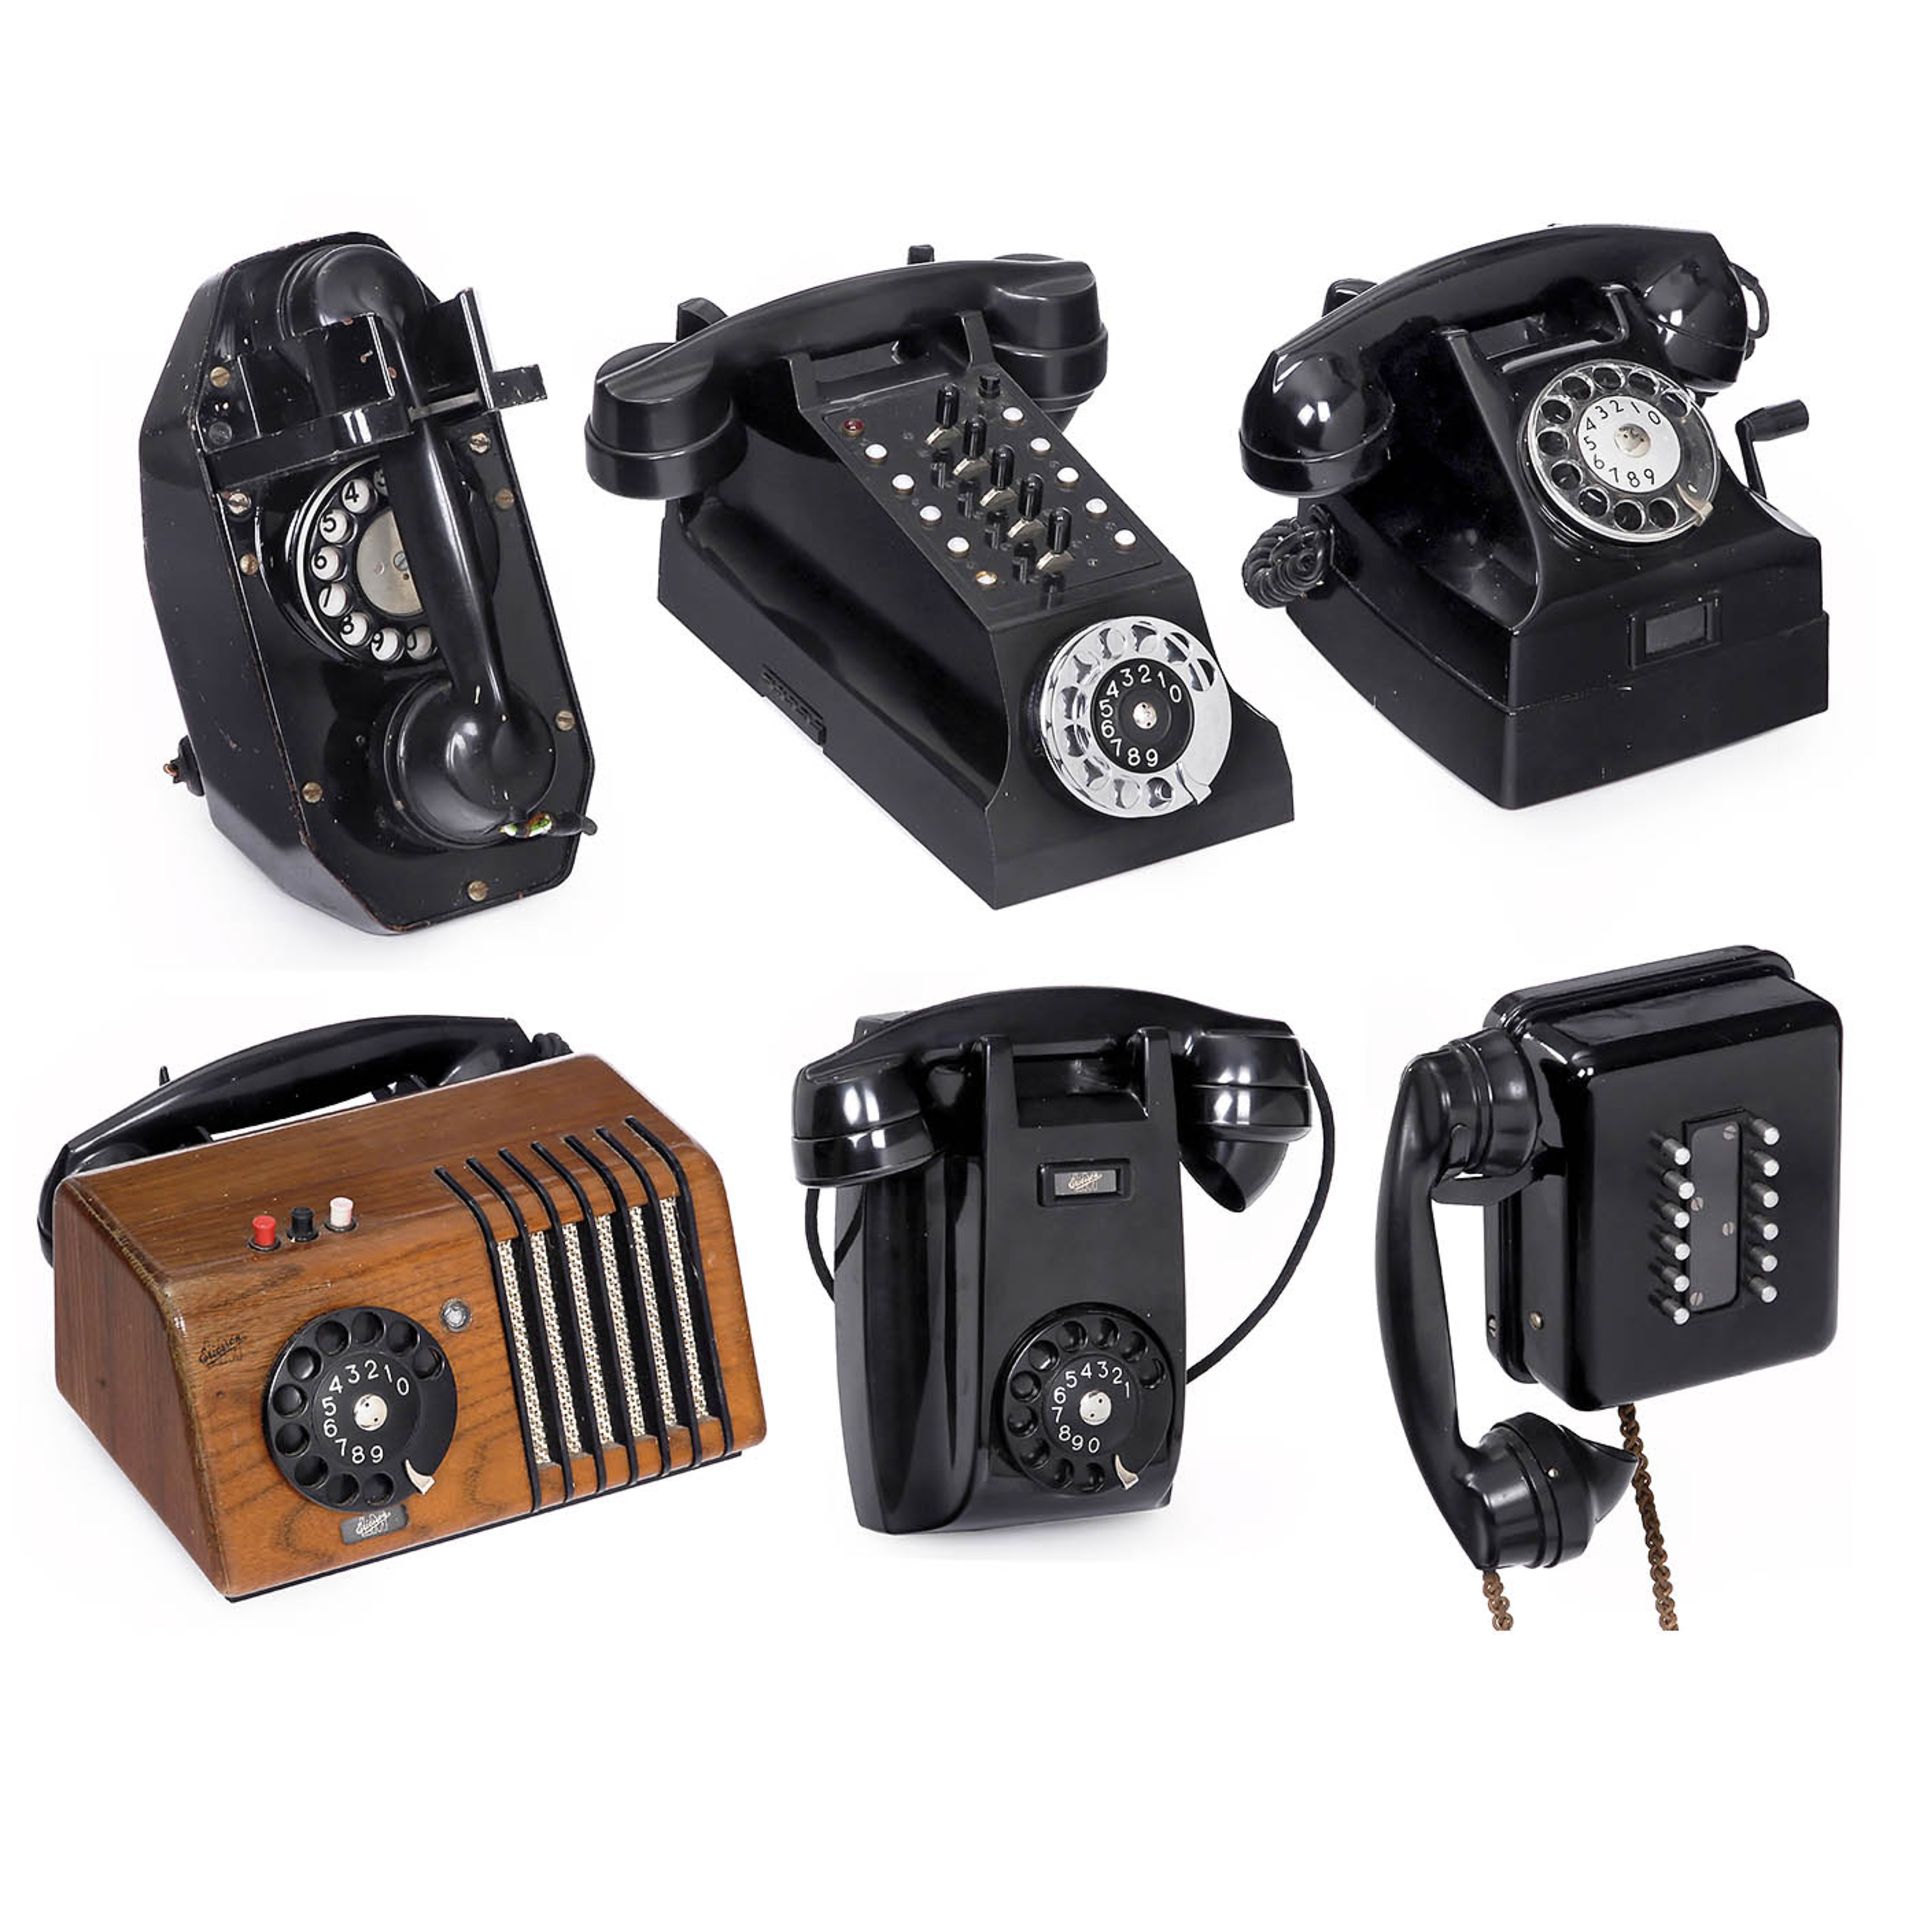 Six Office or Company Telephones, c. 1950